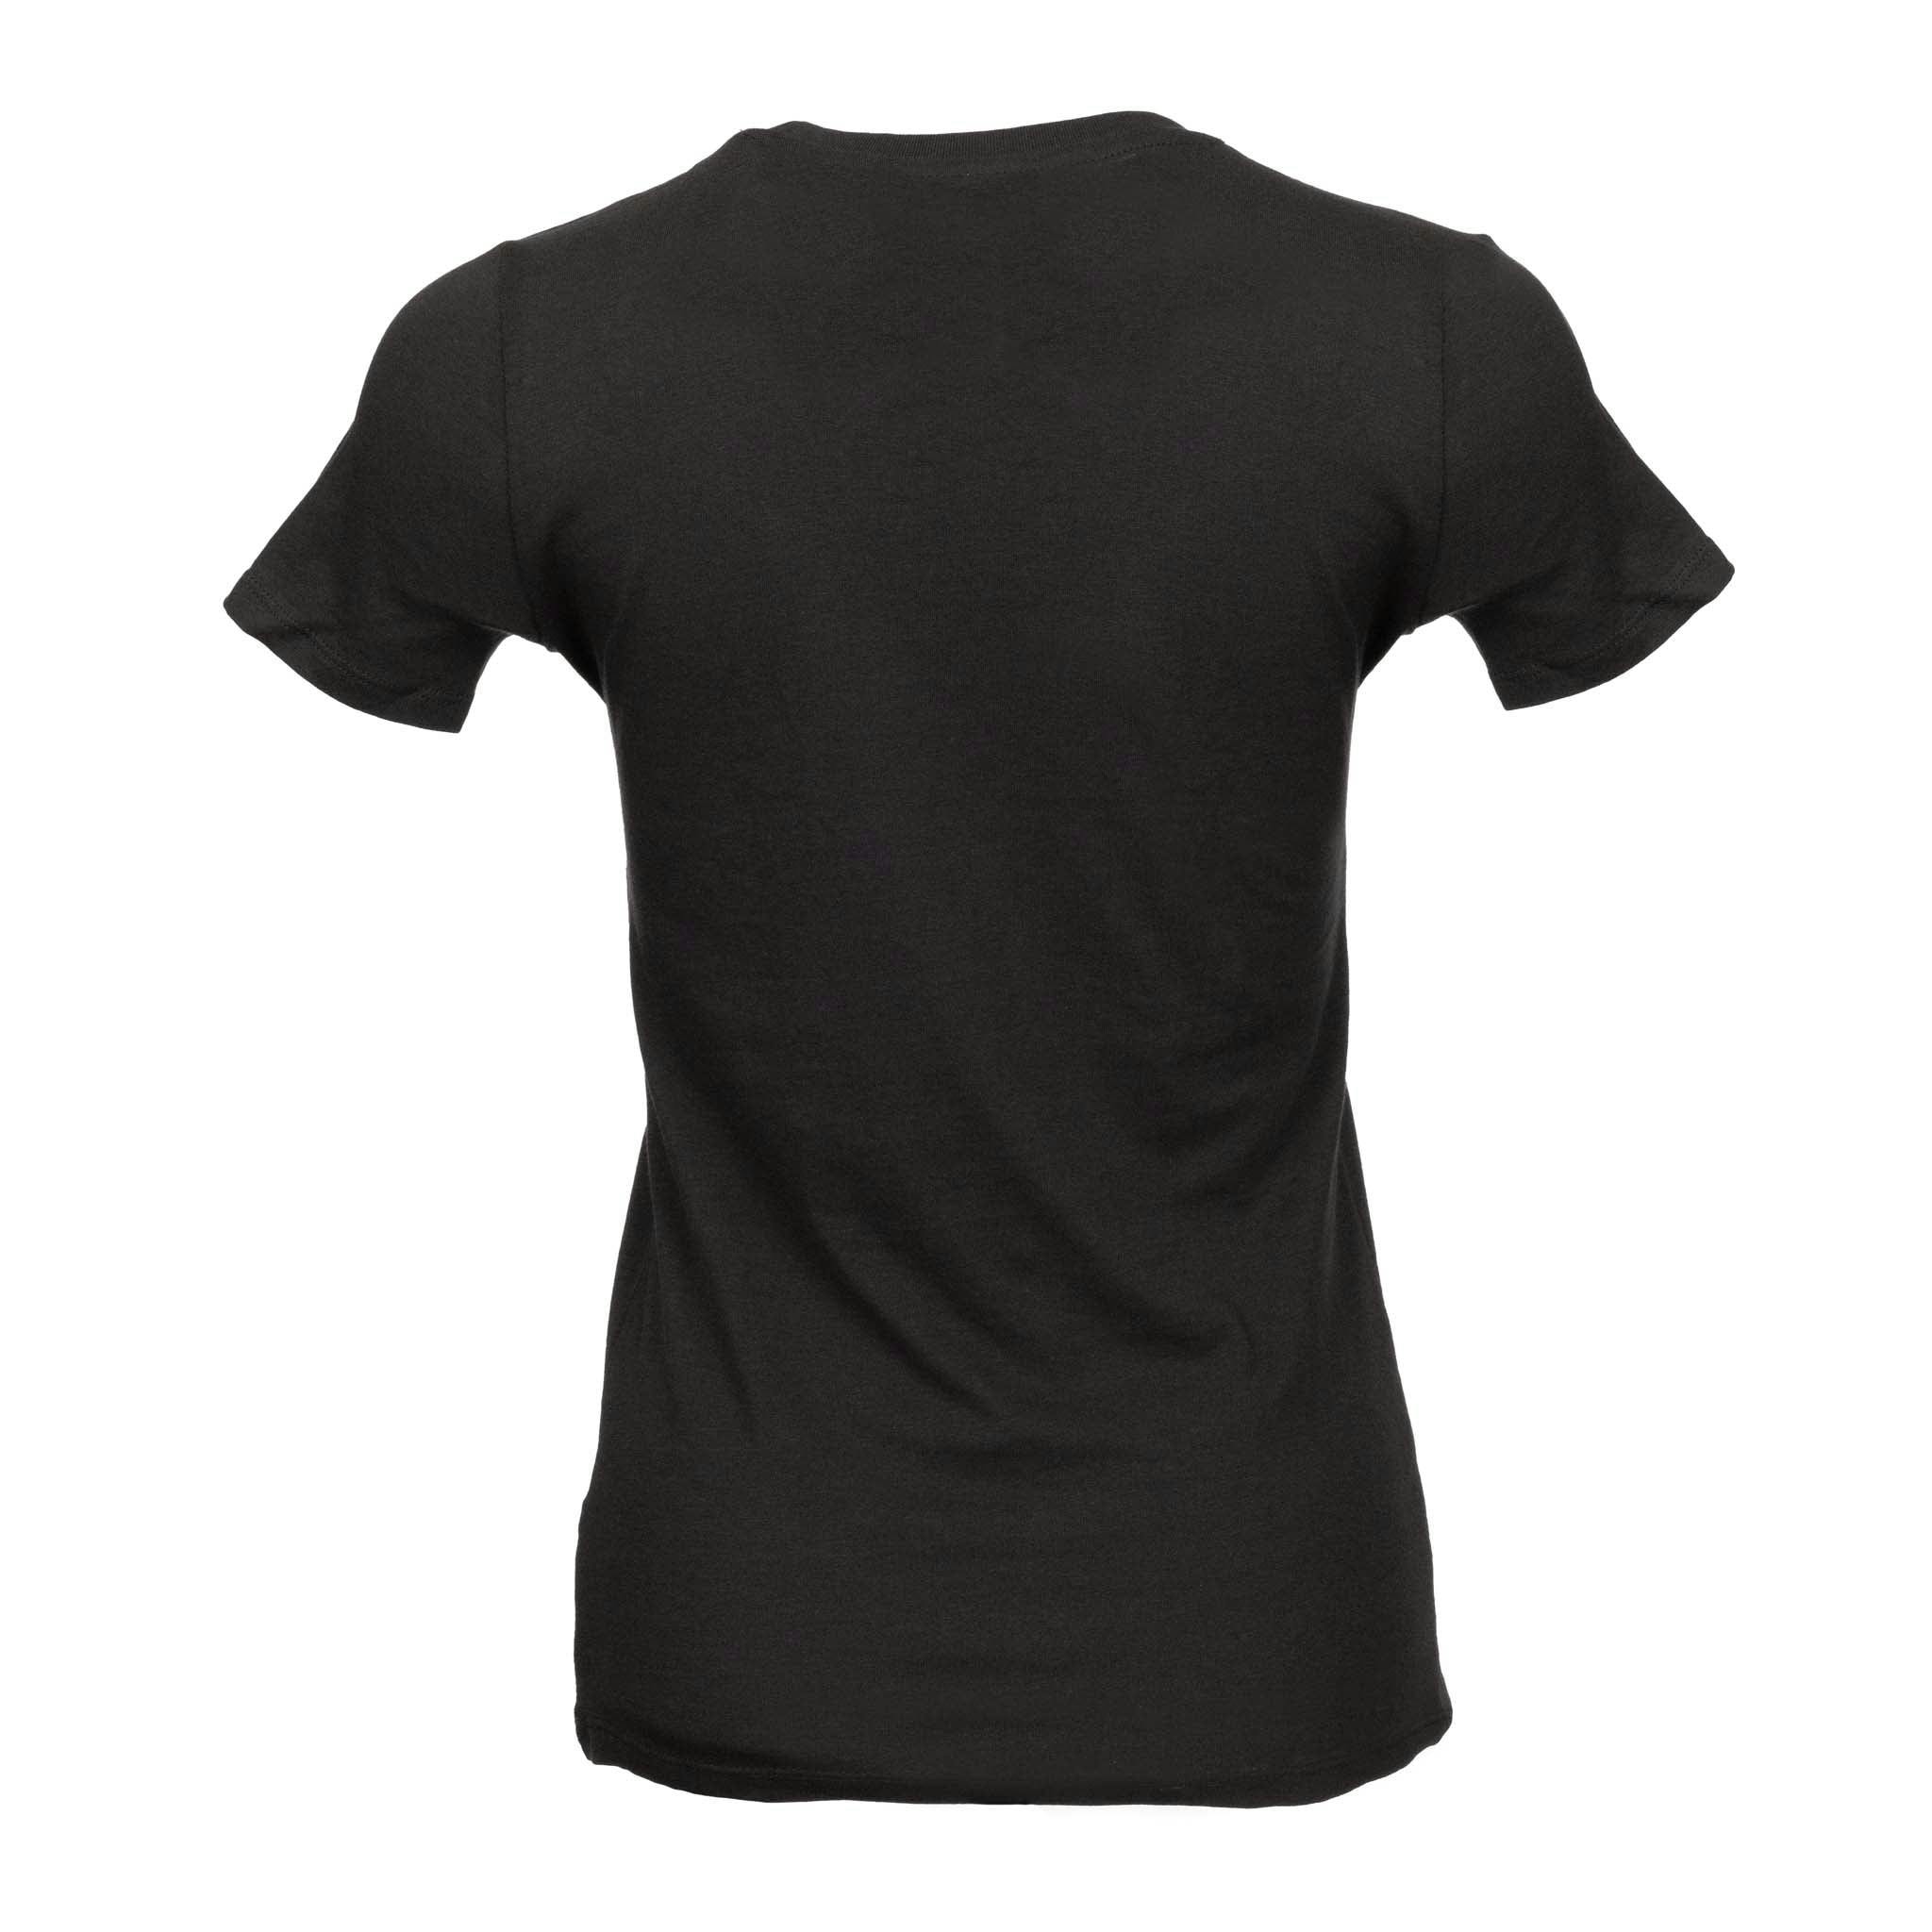 Sierra Nevada Women's Handcrafted T-Shirt Black - Back view